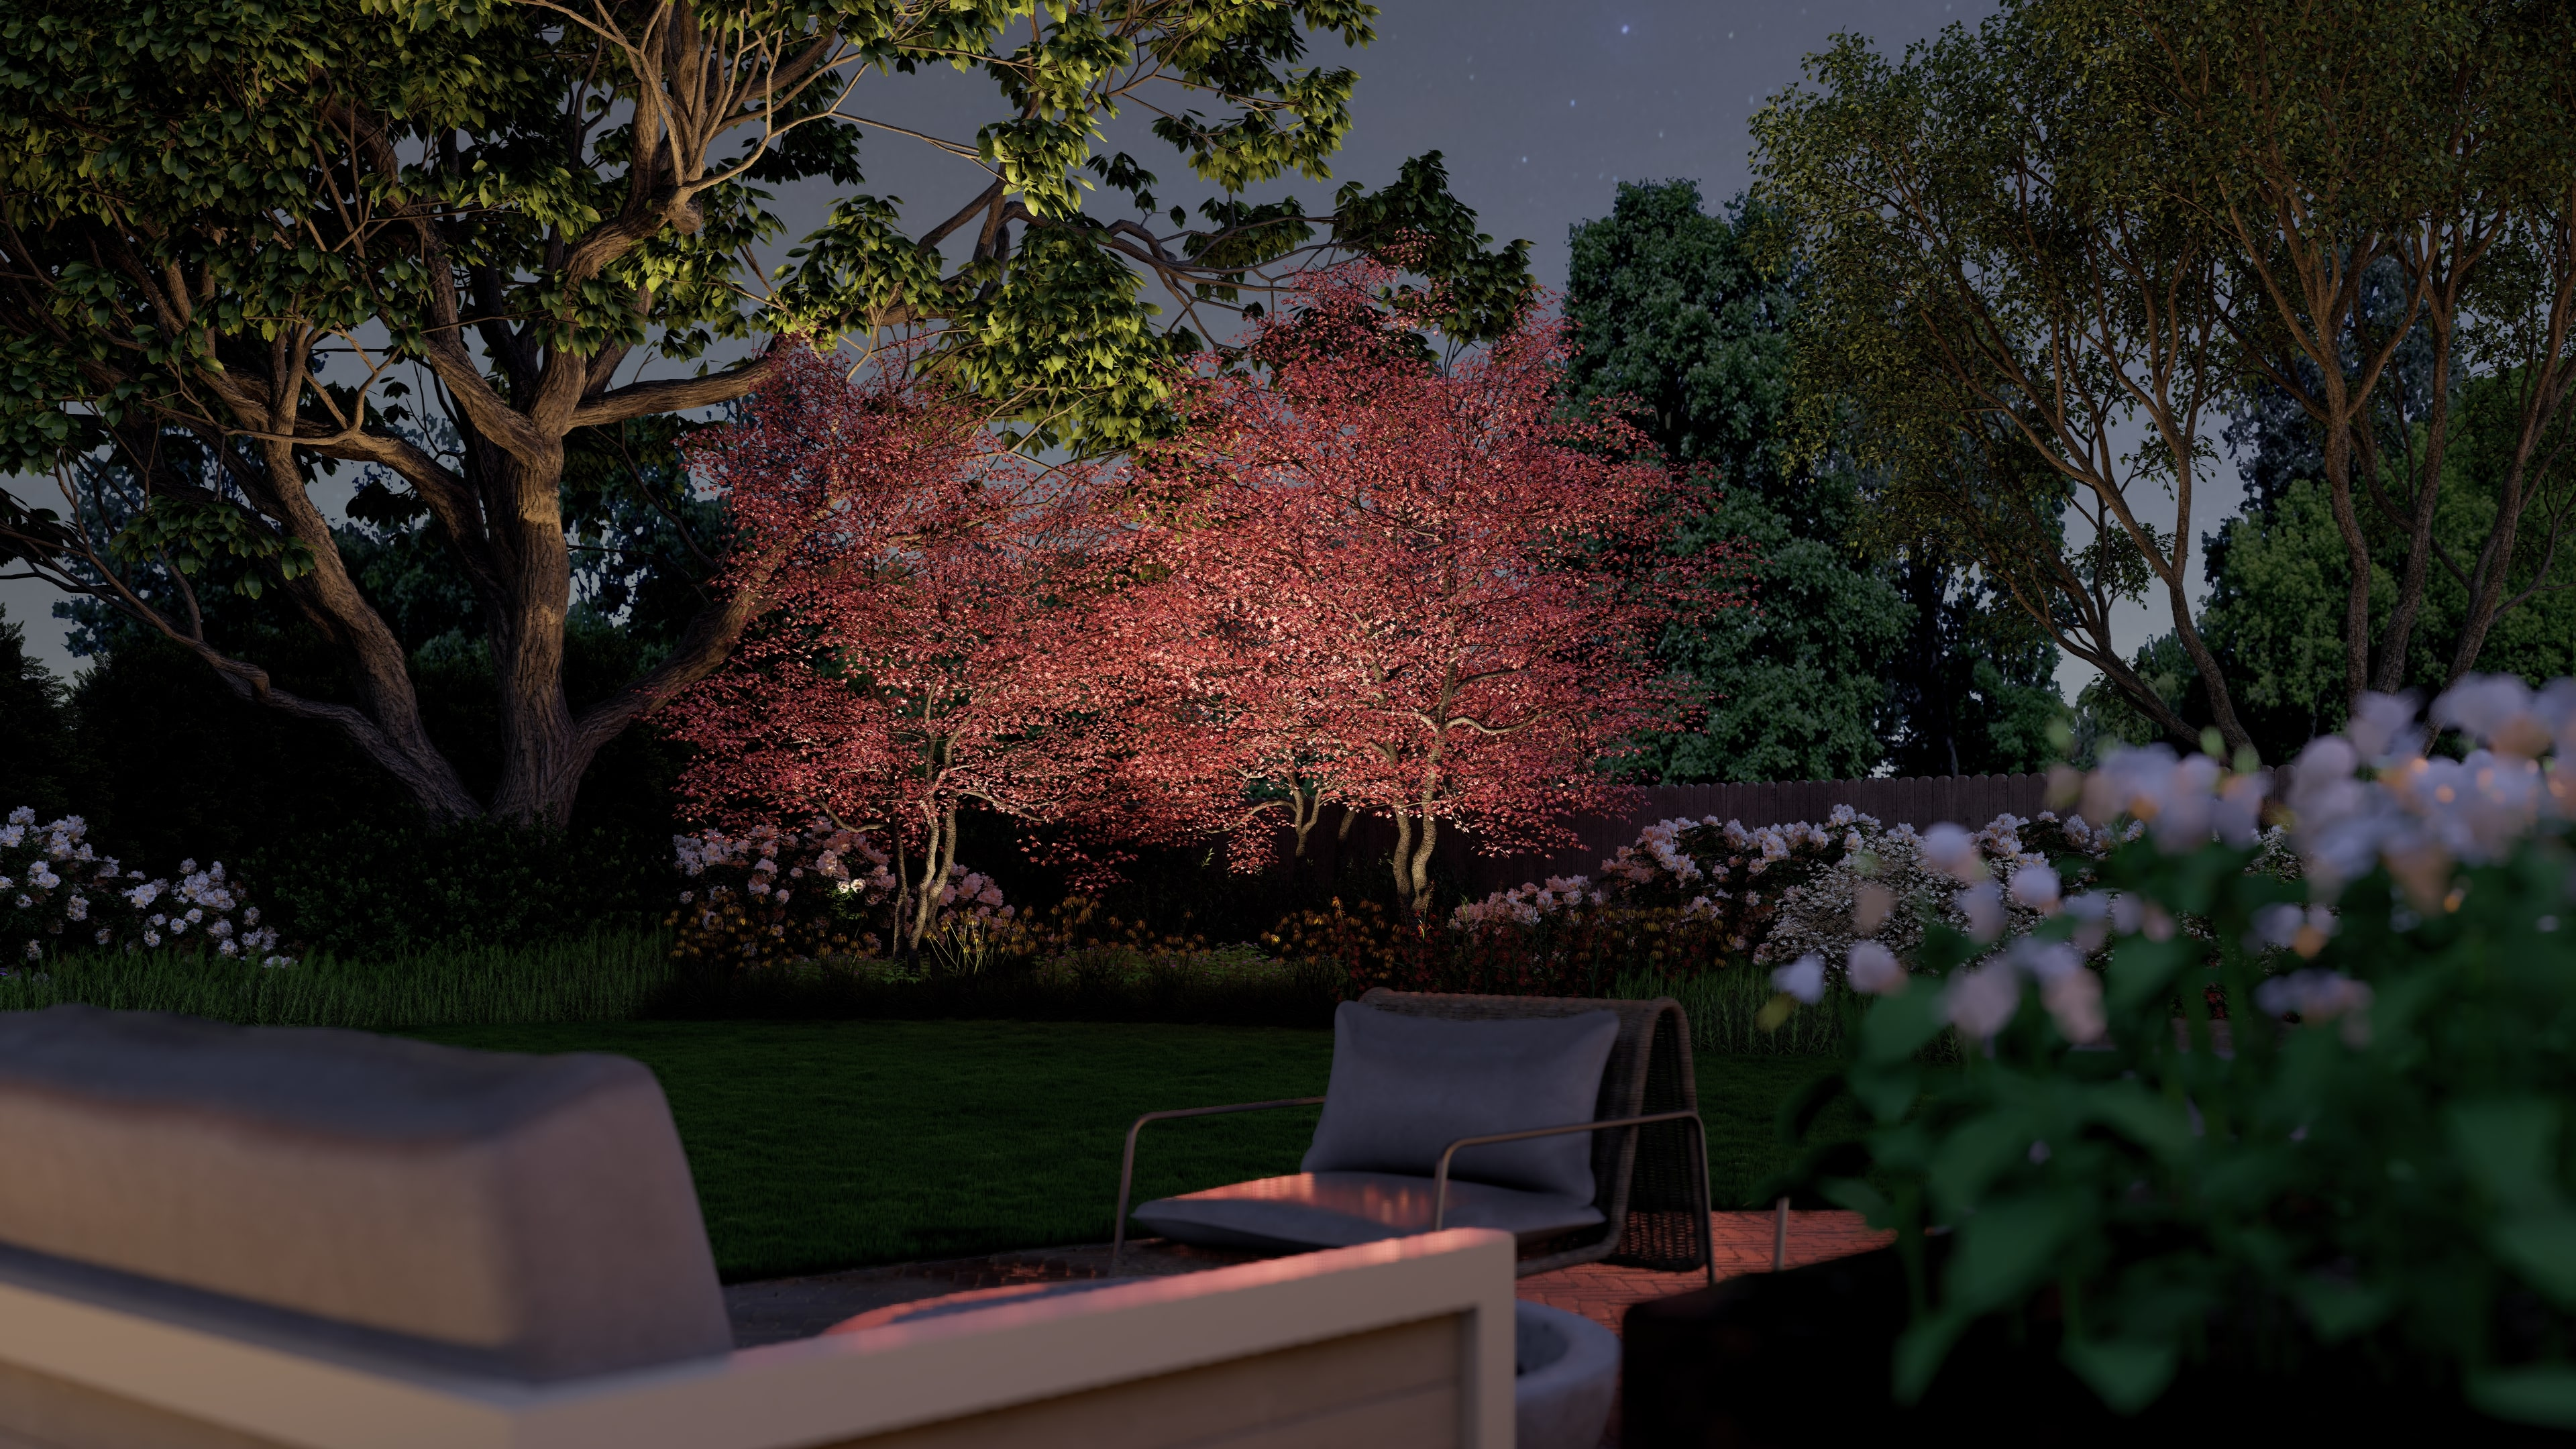 Landscape lighting that highlights a spring flowering tree